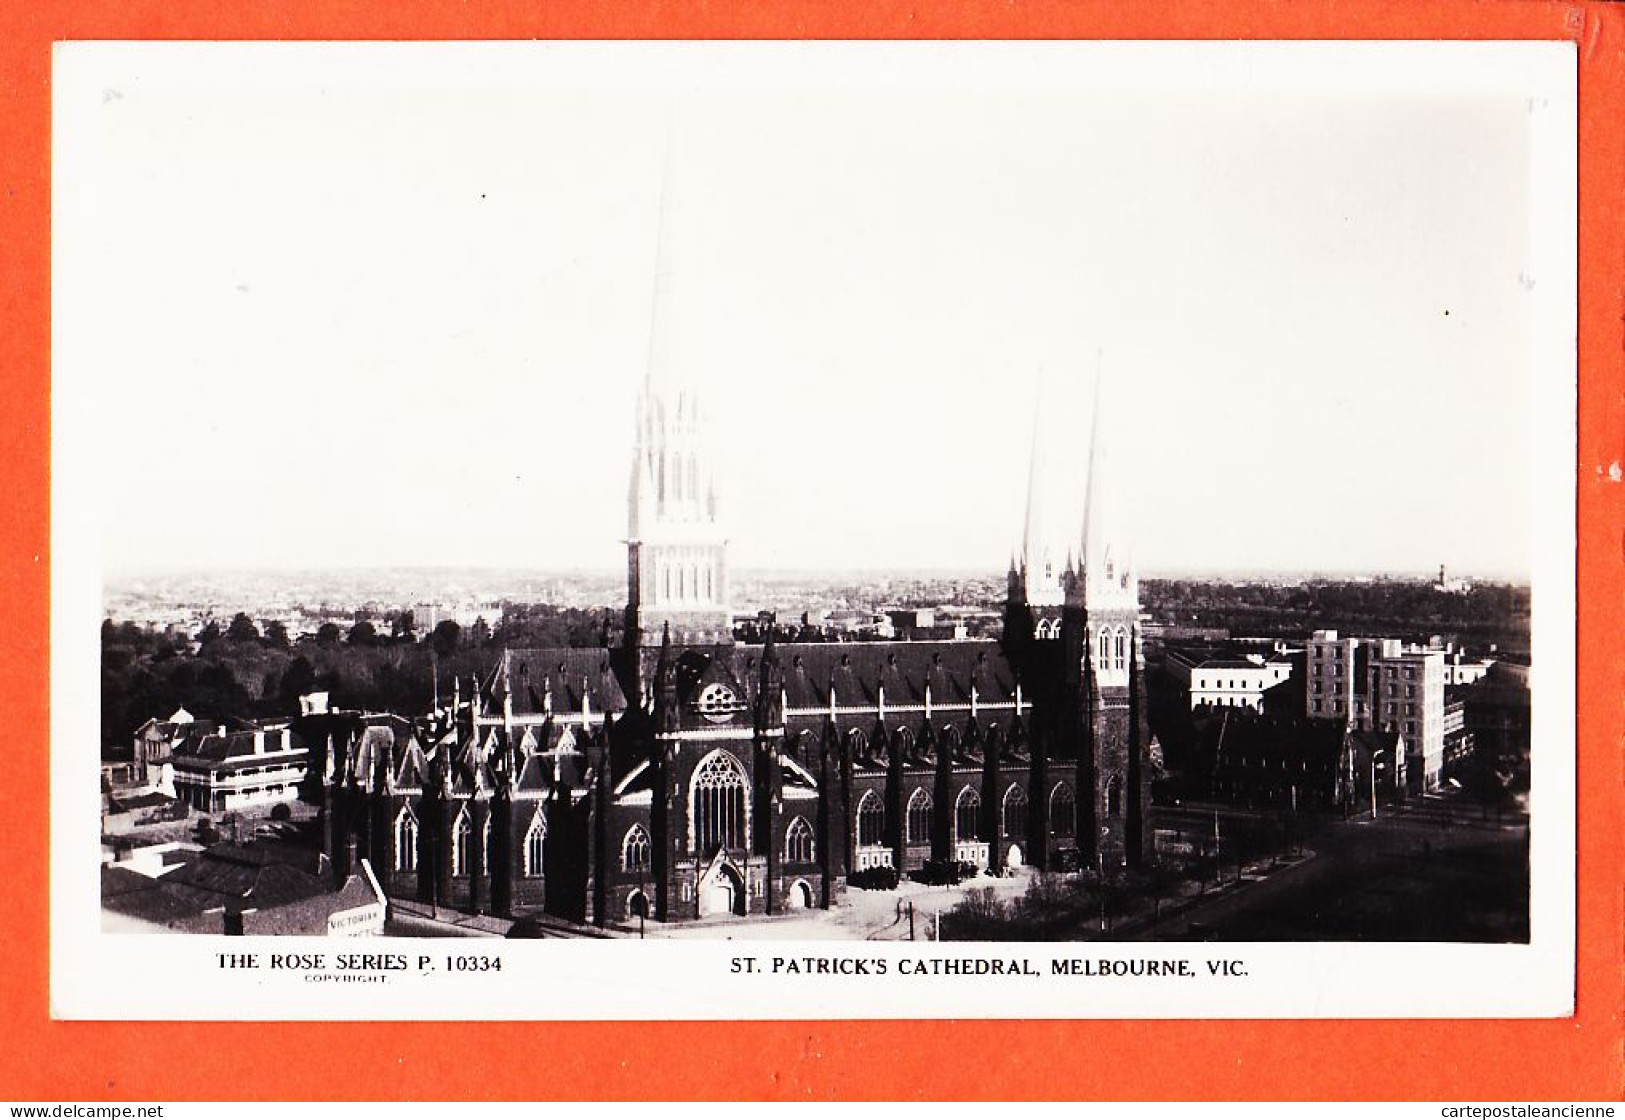 08093 ● MELBOURNE Australia Victoria (VIC) ST. PATRICK'S Cathedral 1920s THE ROSE Stereograph Series P.10334 Armadale - Melbourne